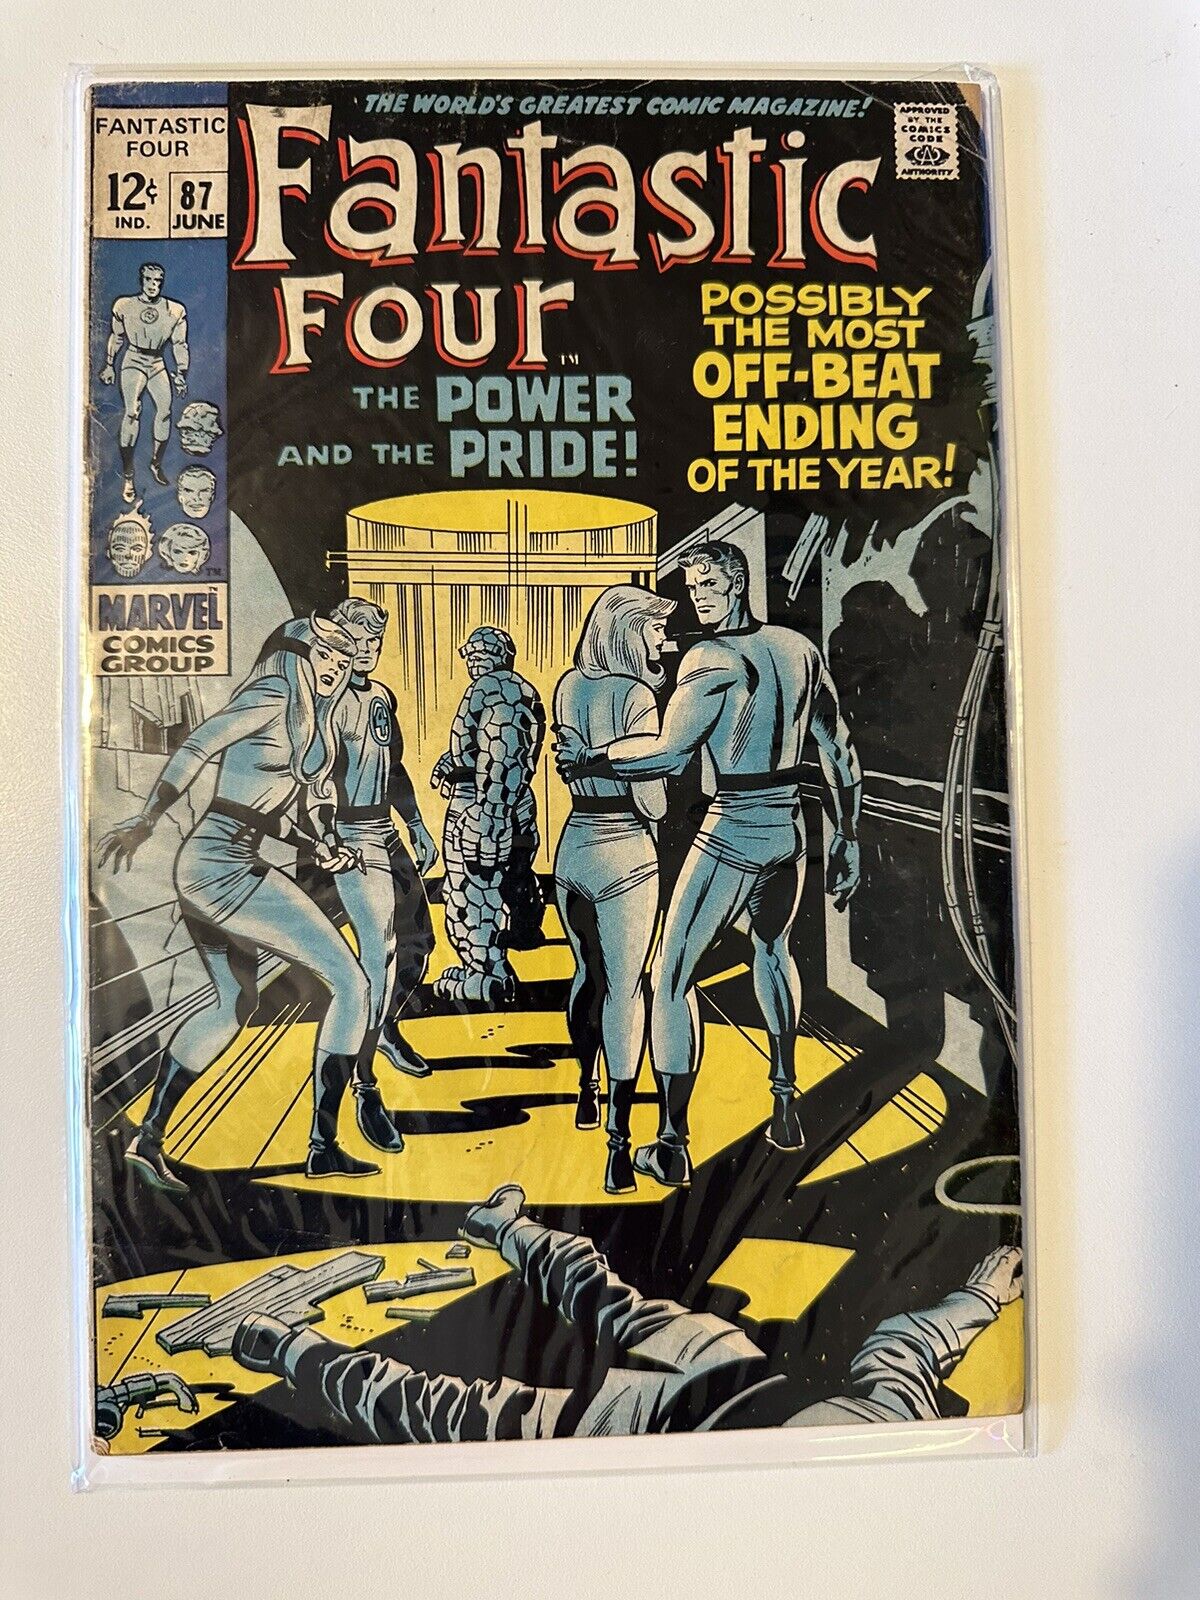 Fantastic Four #87 - Marvel - Stan Lee Jack Kirby - 1969